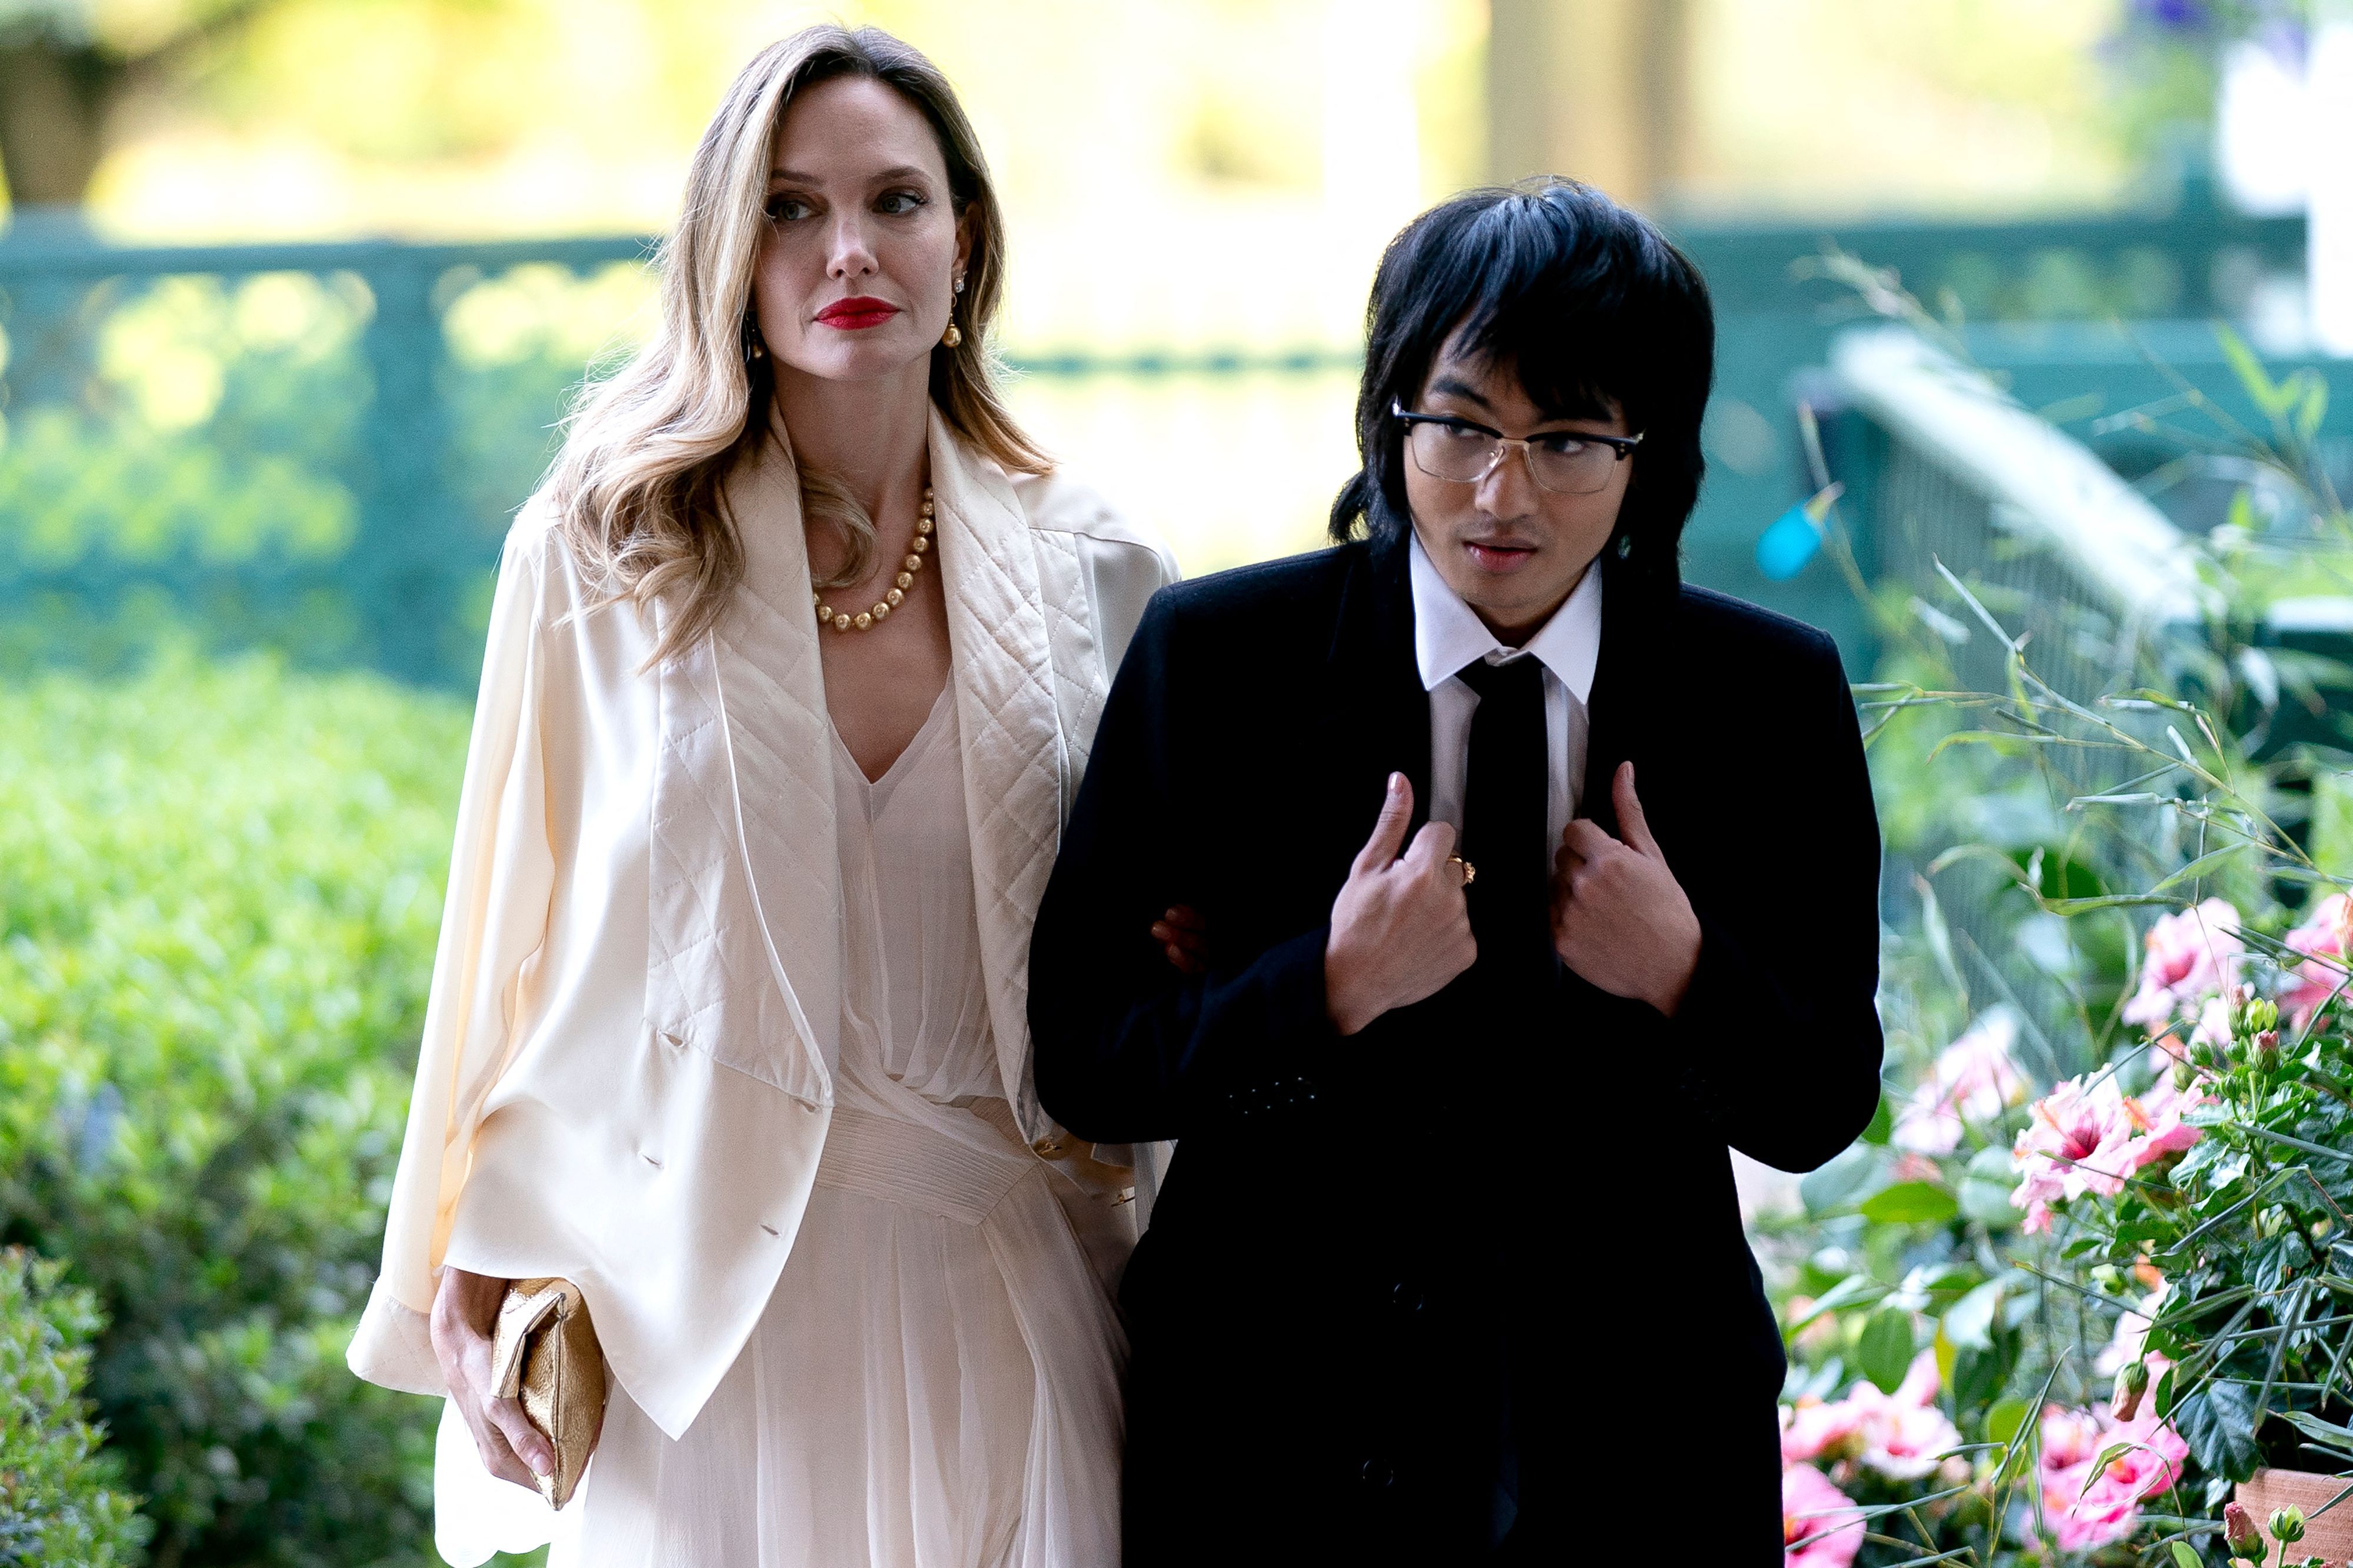 Angelina Jolie Has Arisen As A Fierce Blonde